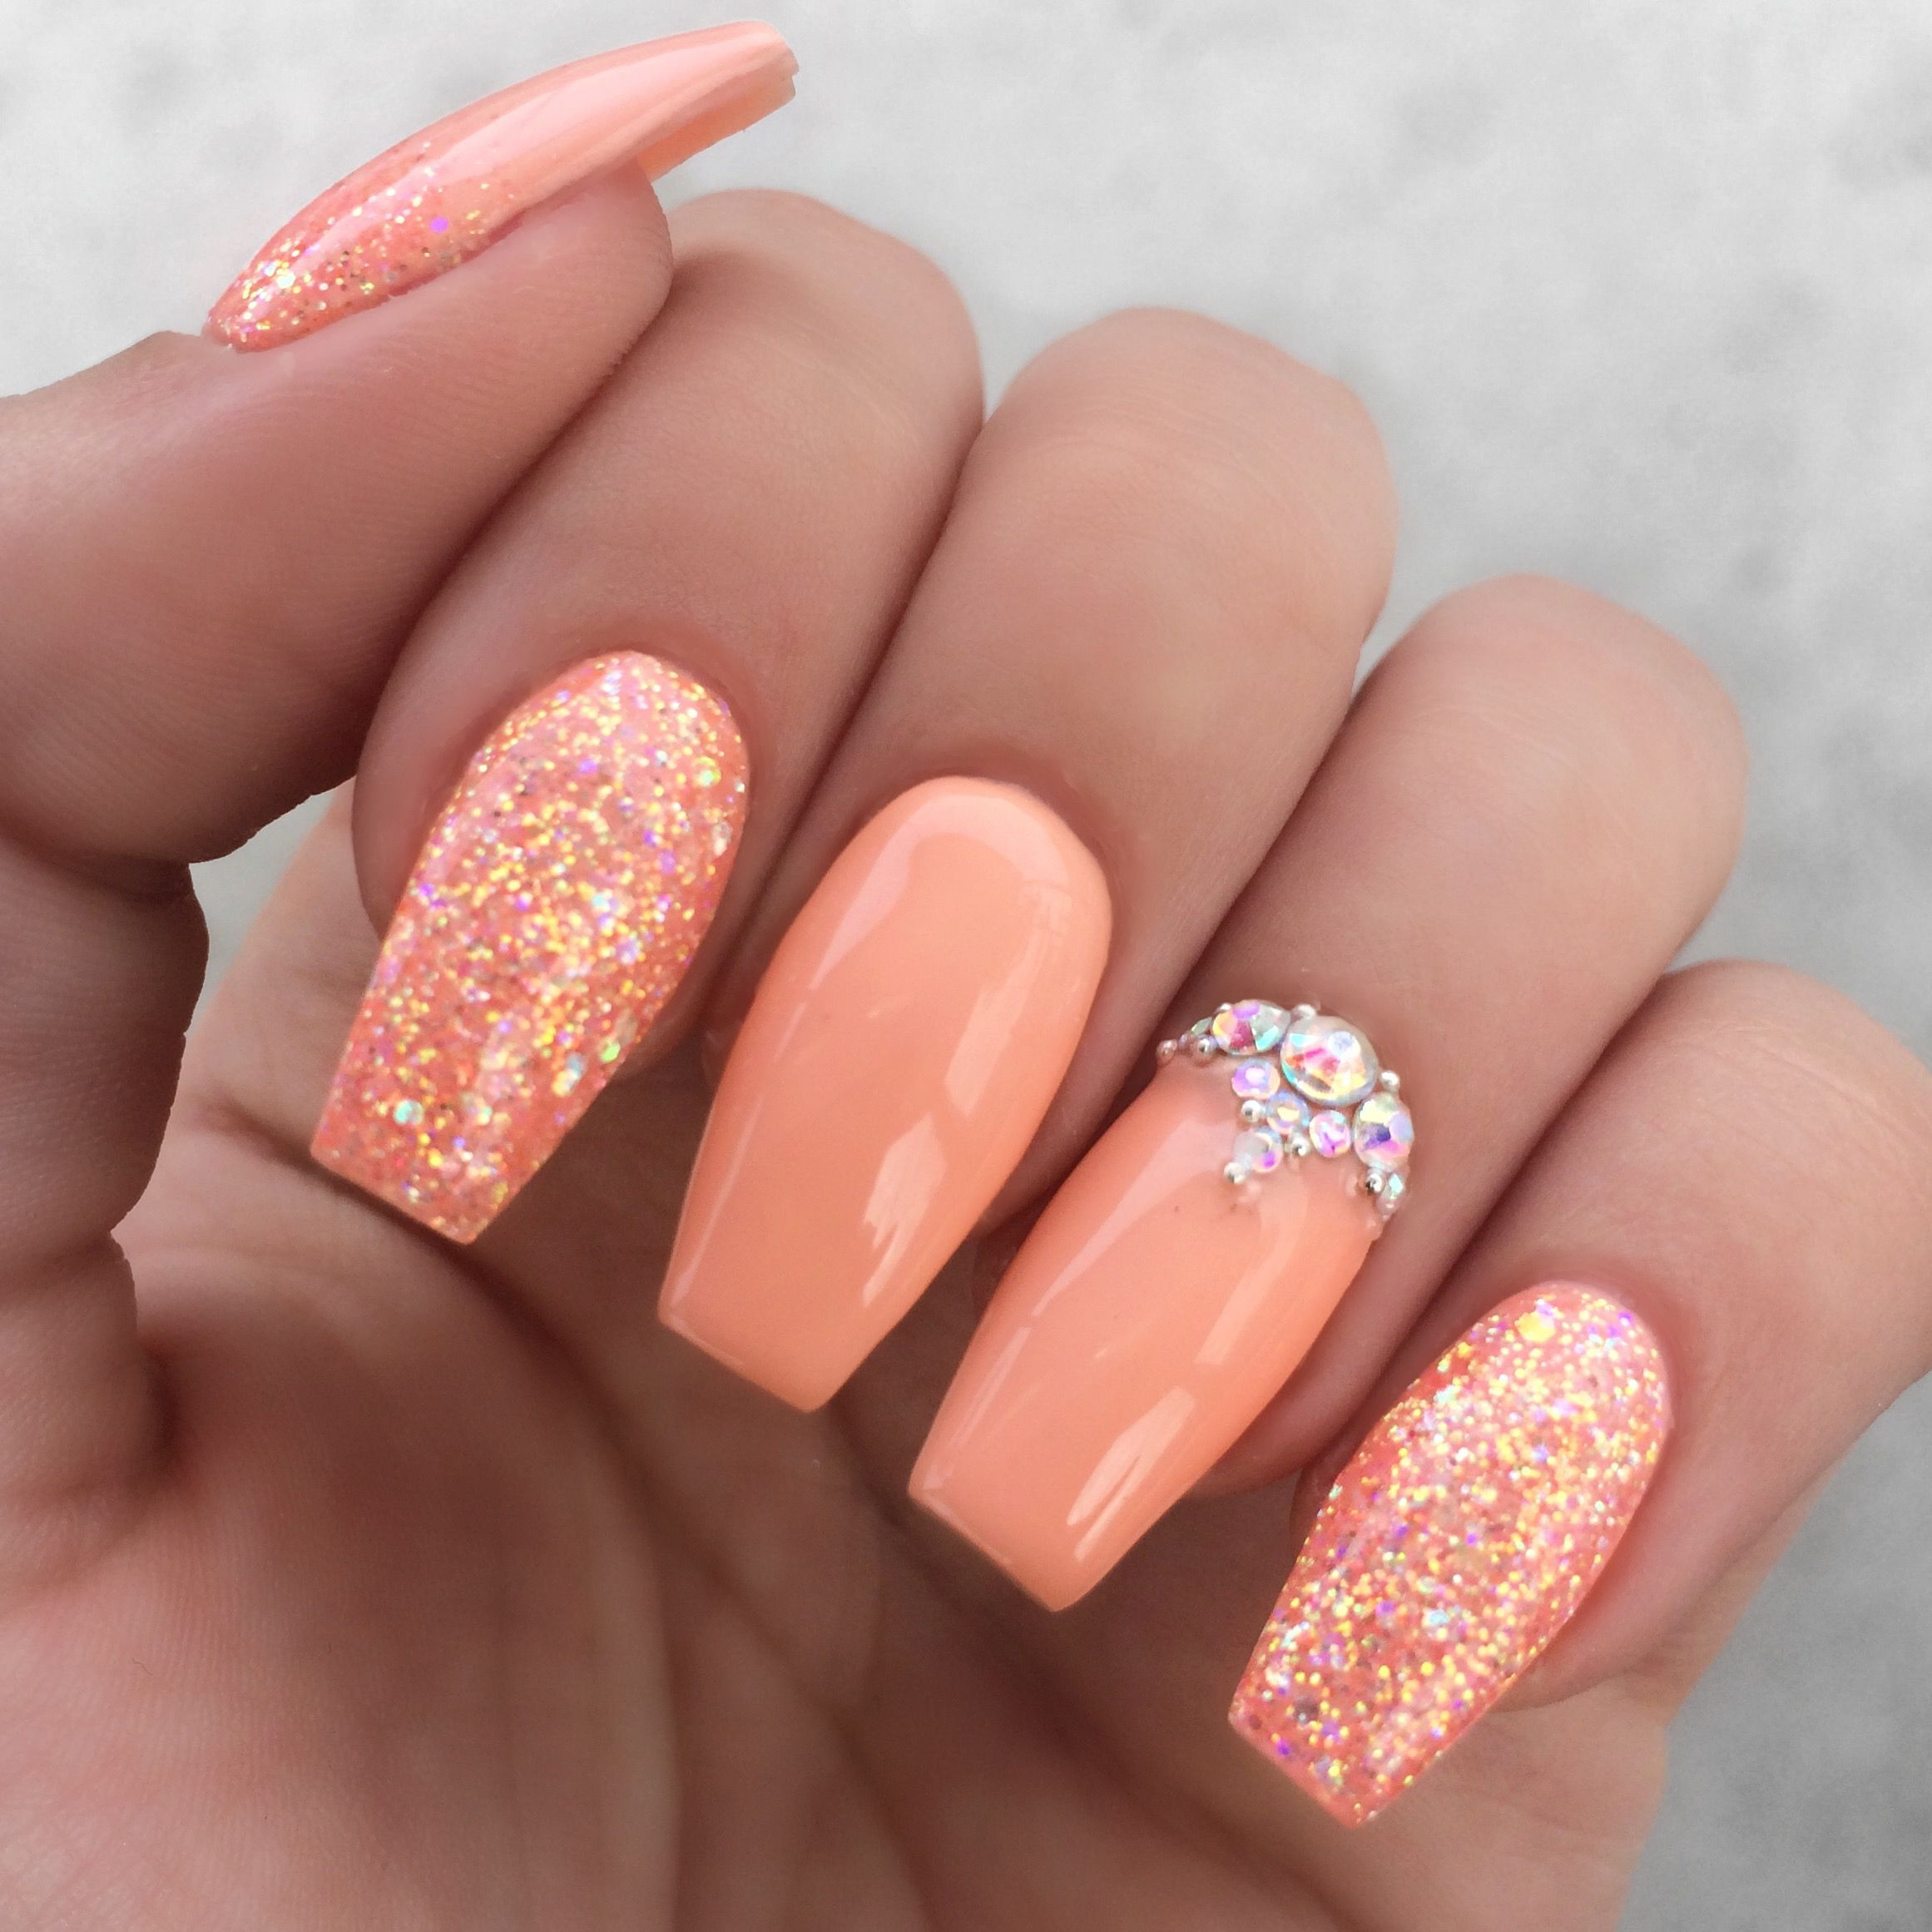 Acrylic Nails With Glitter
 Girly peach glitter rhinestone nails